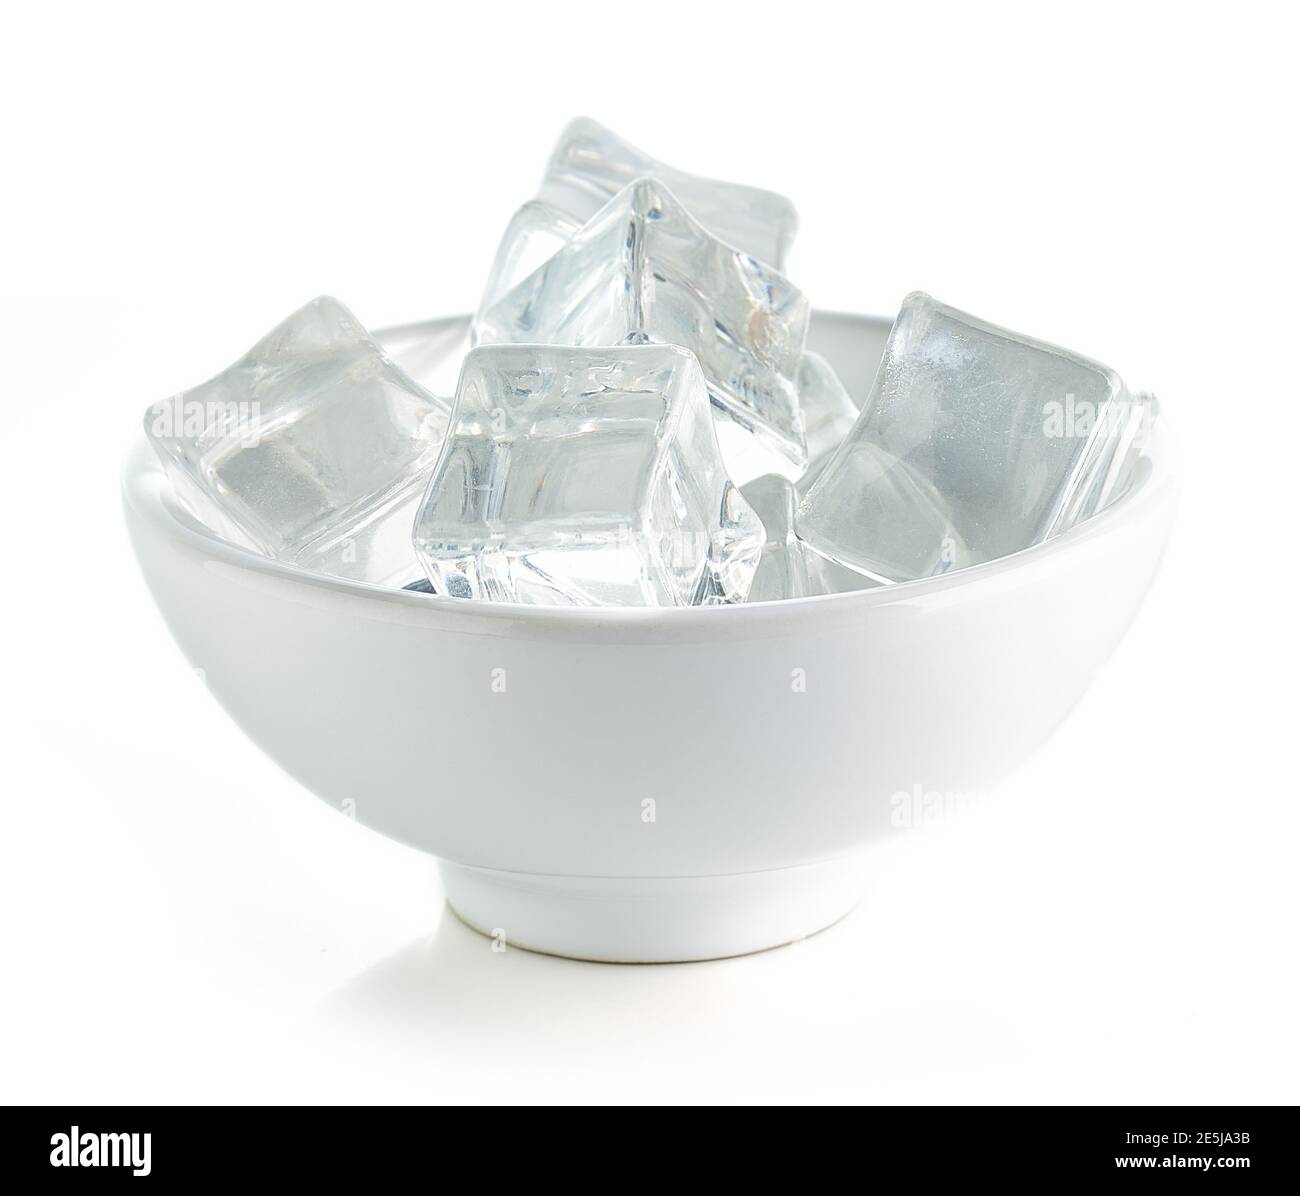 3+ Thousand Crushed Ice Bowl Royalty-Free Images, Stock Photos